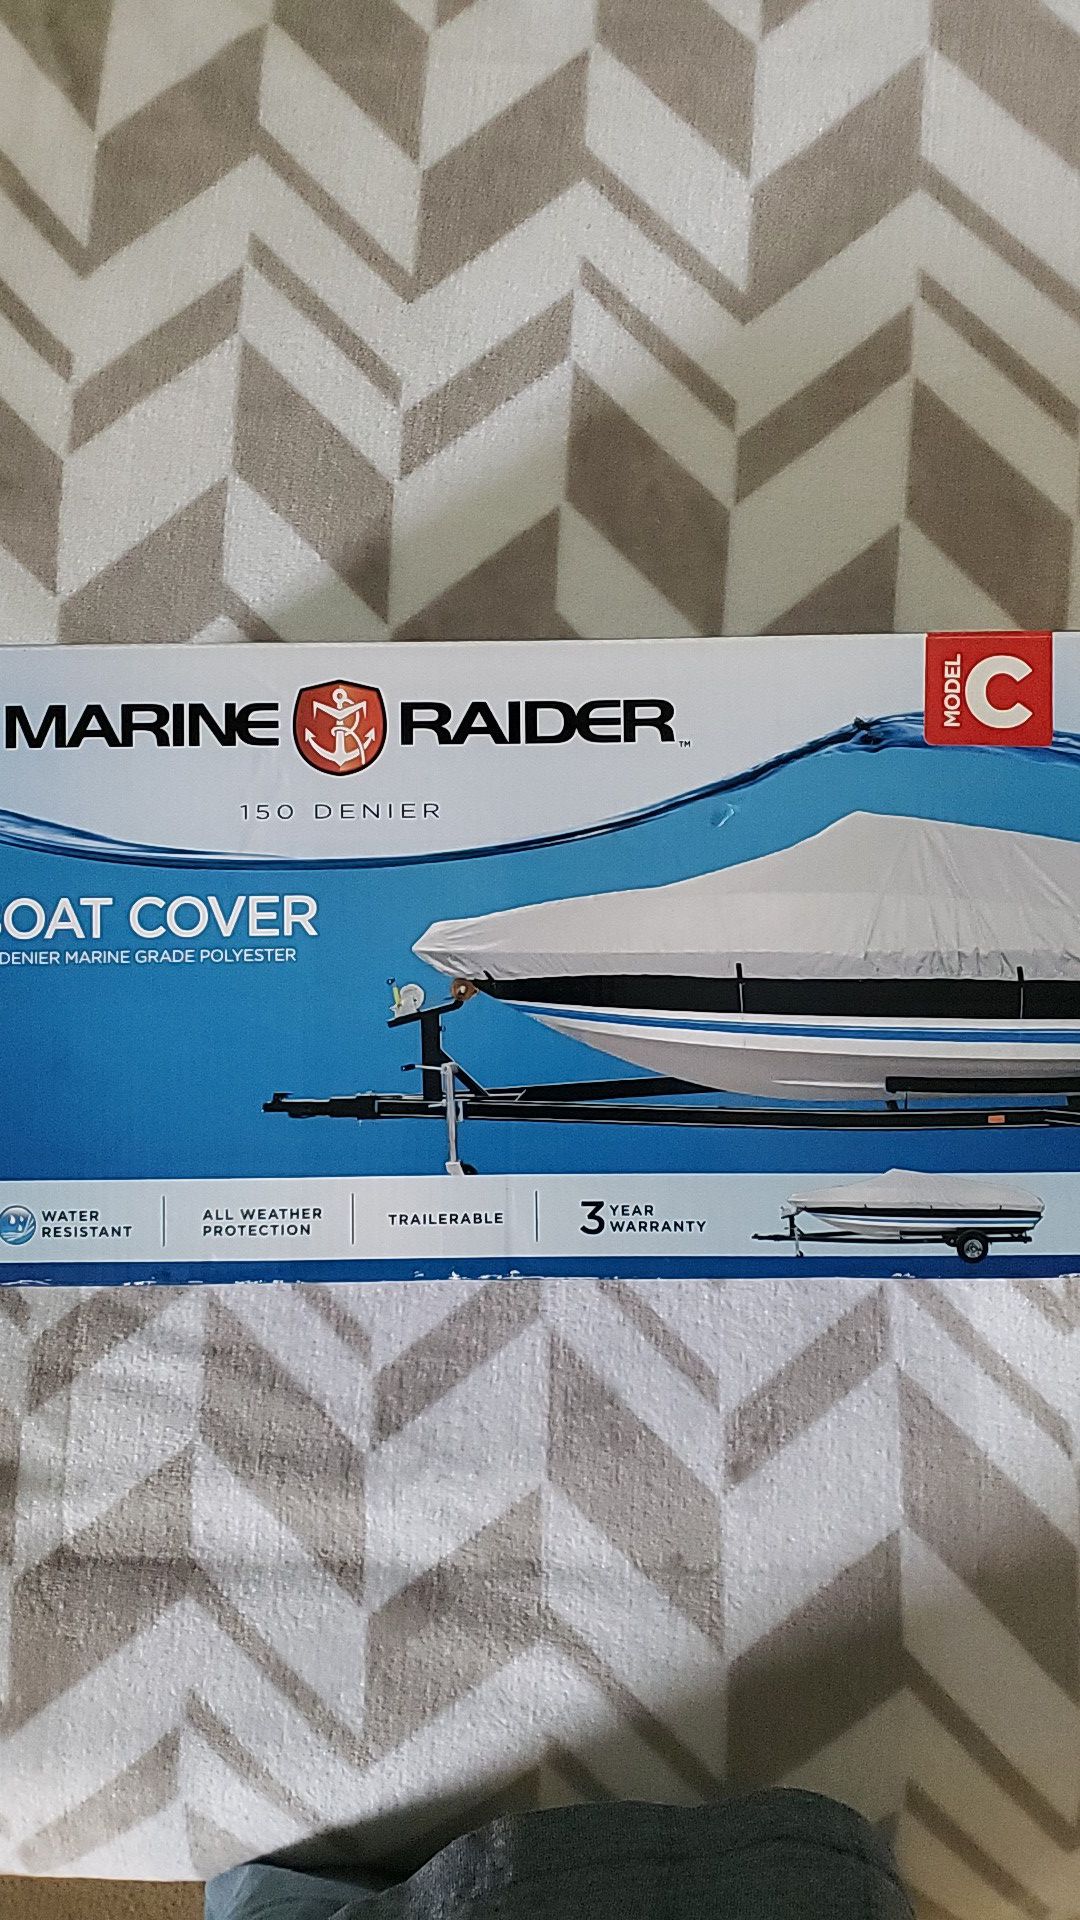 New Marine Raider boat cover 150 denier model C